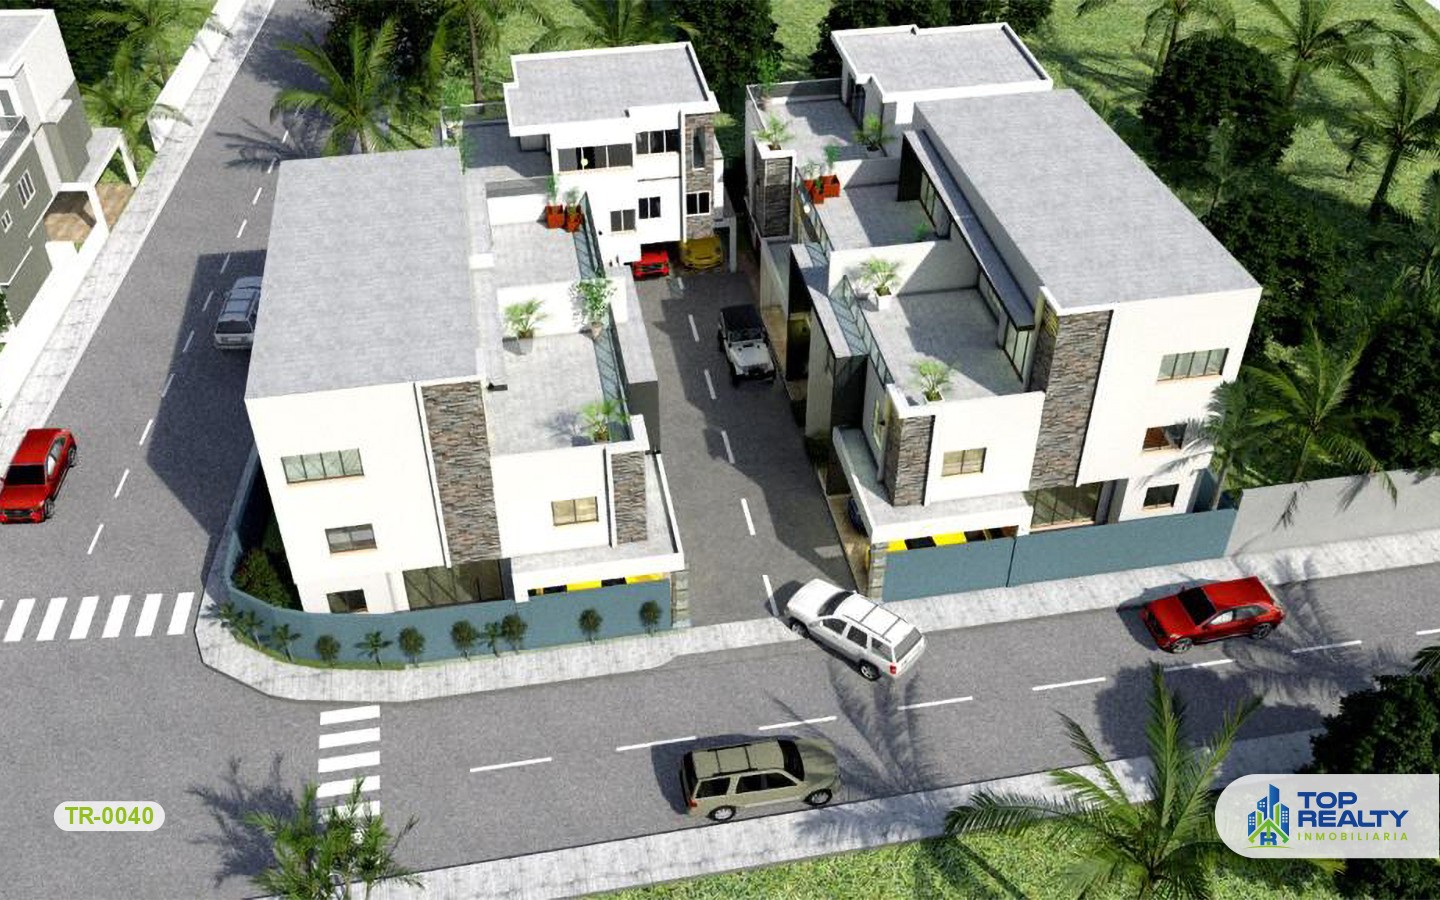 apartamentos - TR-0040: ¡Proyecto único! Casas en tres niveles con distribución excelente. 1